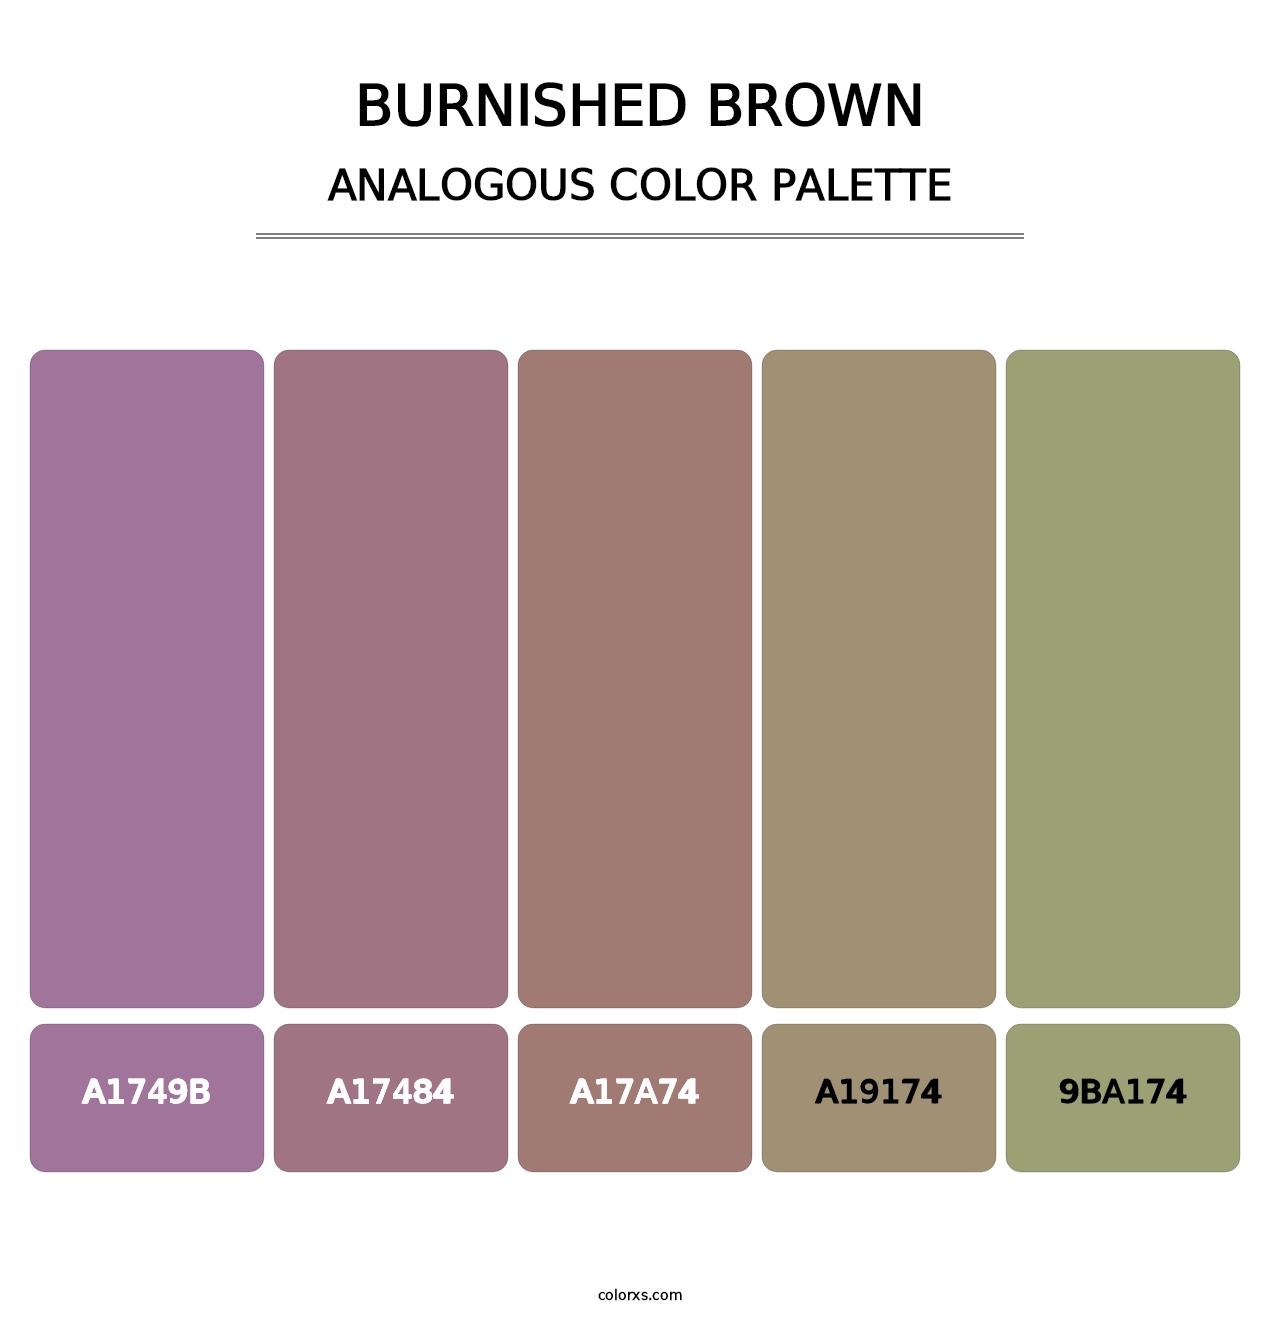 Burnished Brown - Analogous Color Palette